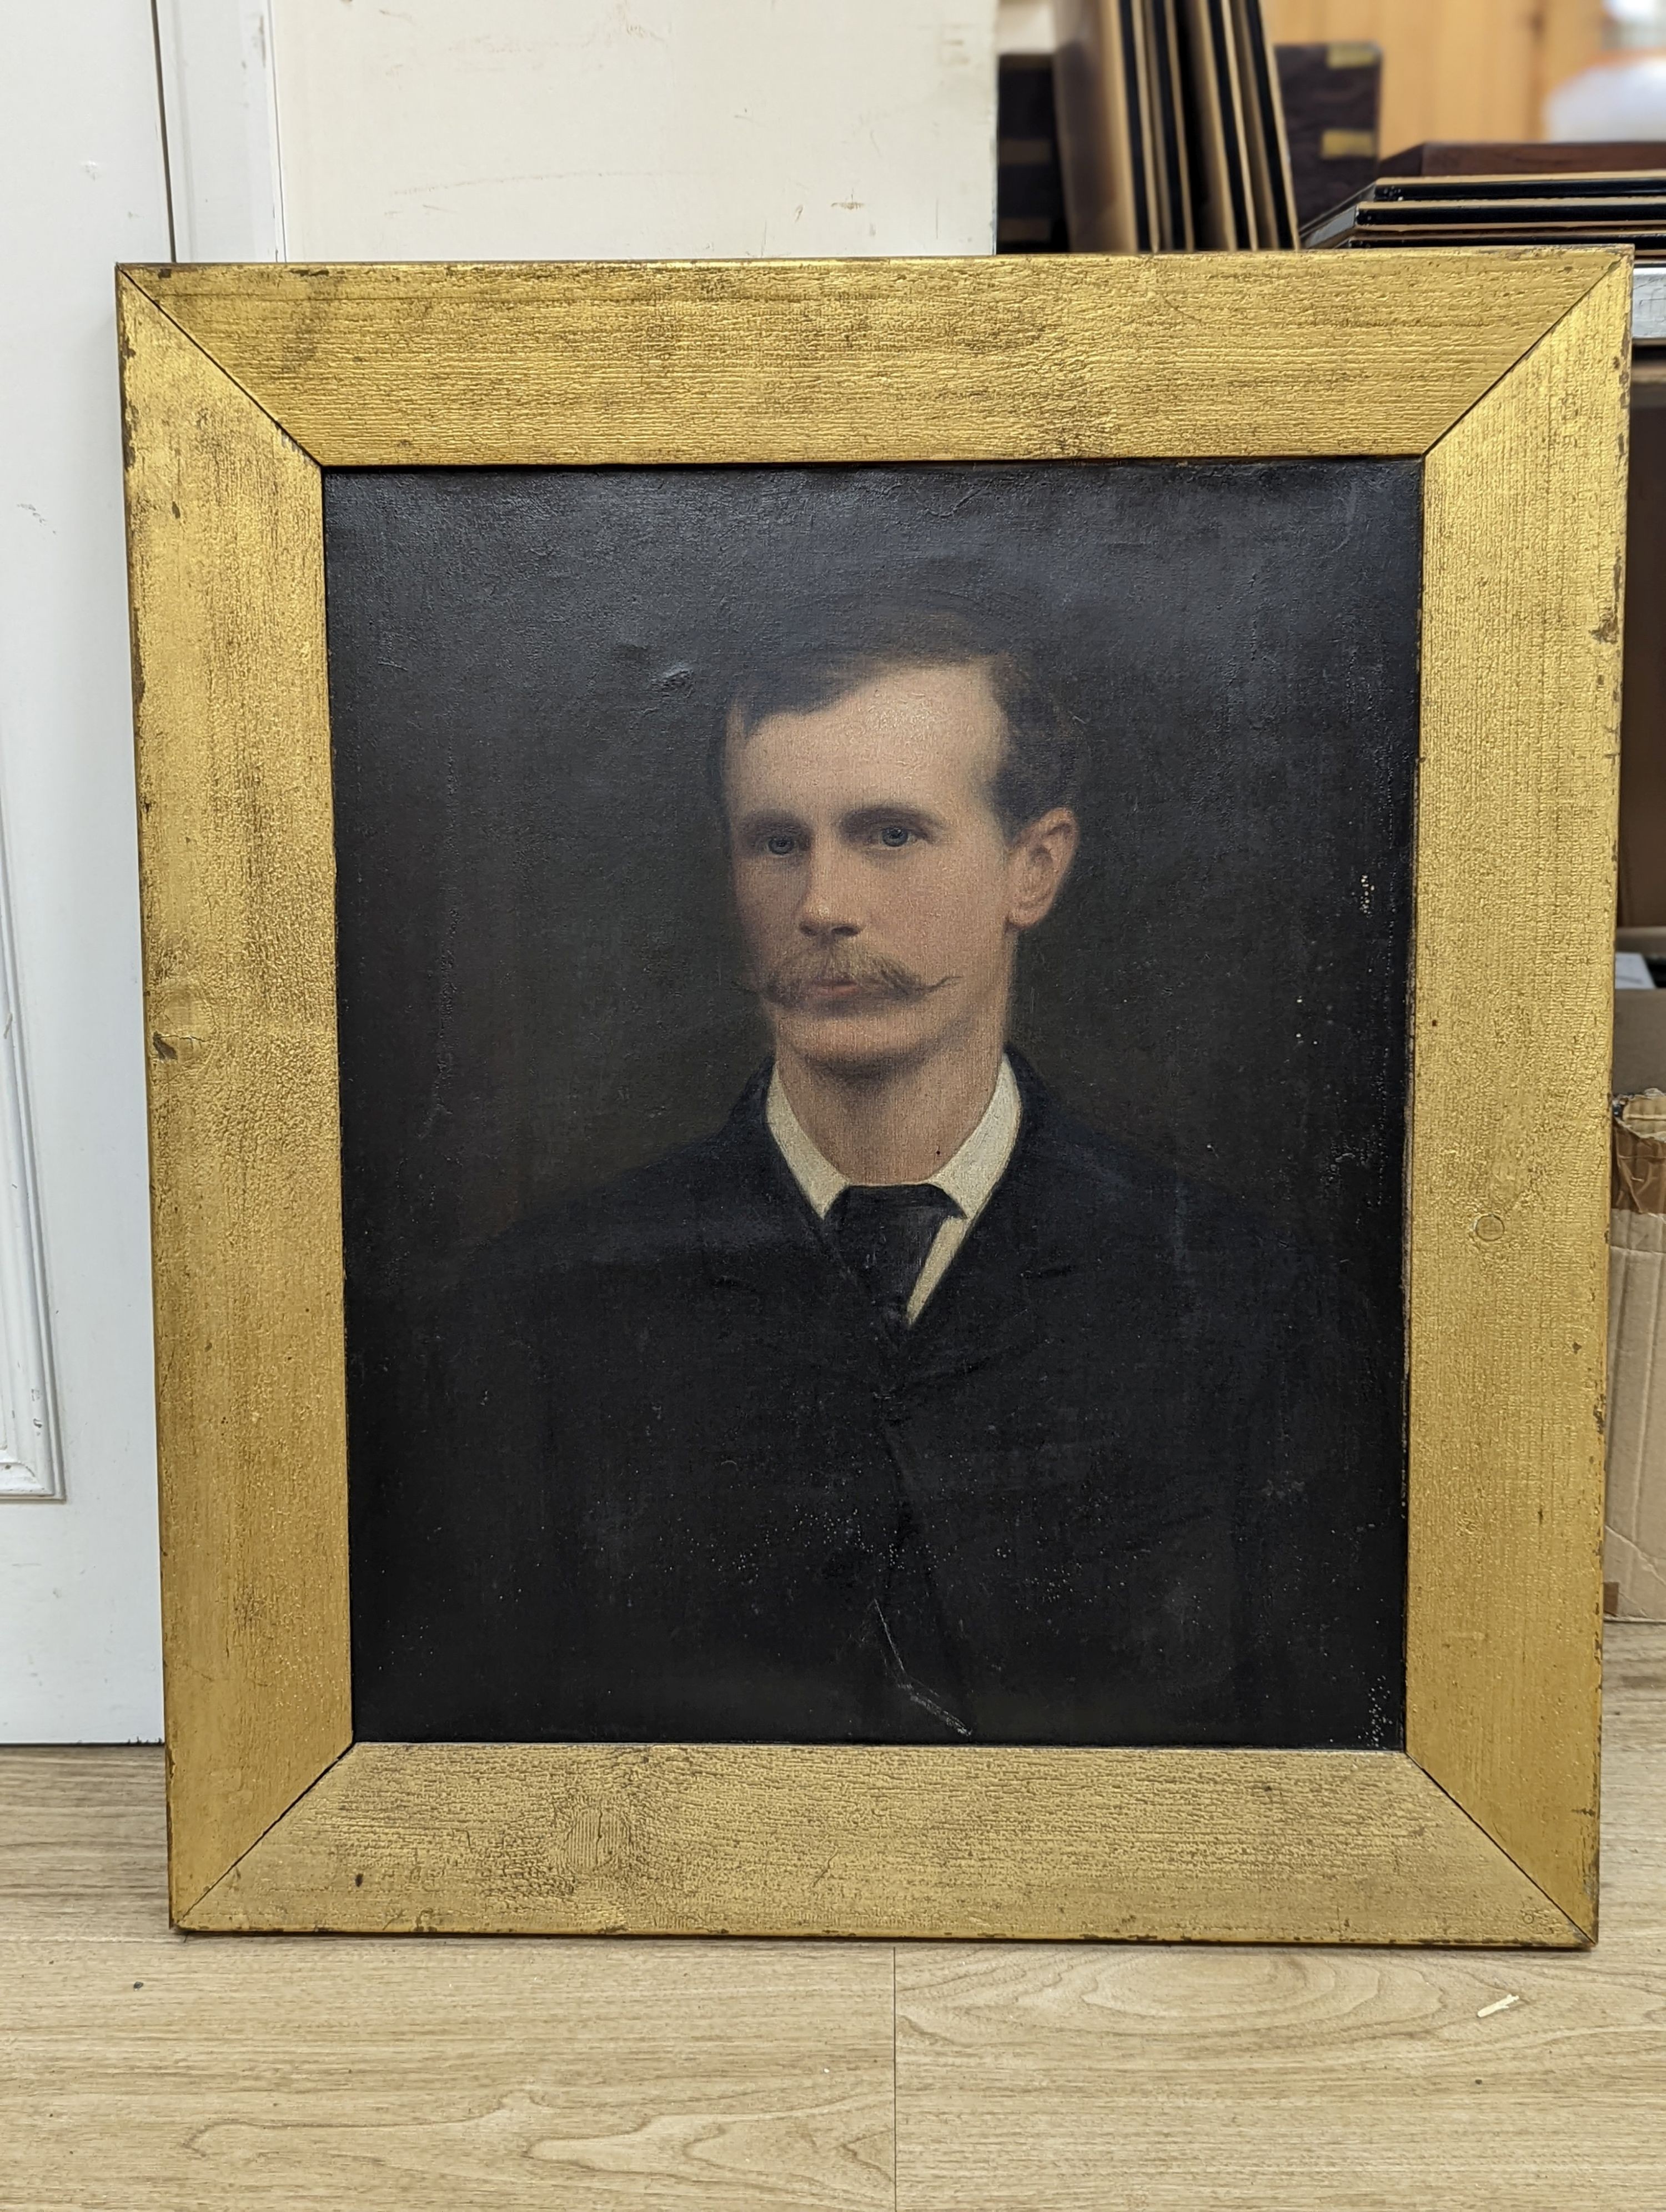 English School c.1900, oil on canvas, Portrait of a gentleman, 60 x 50cm